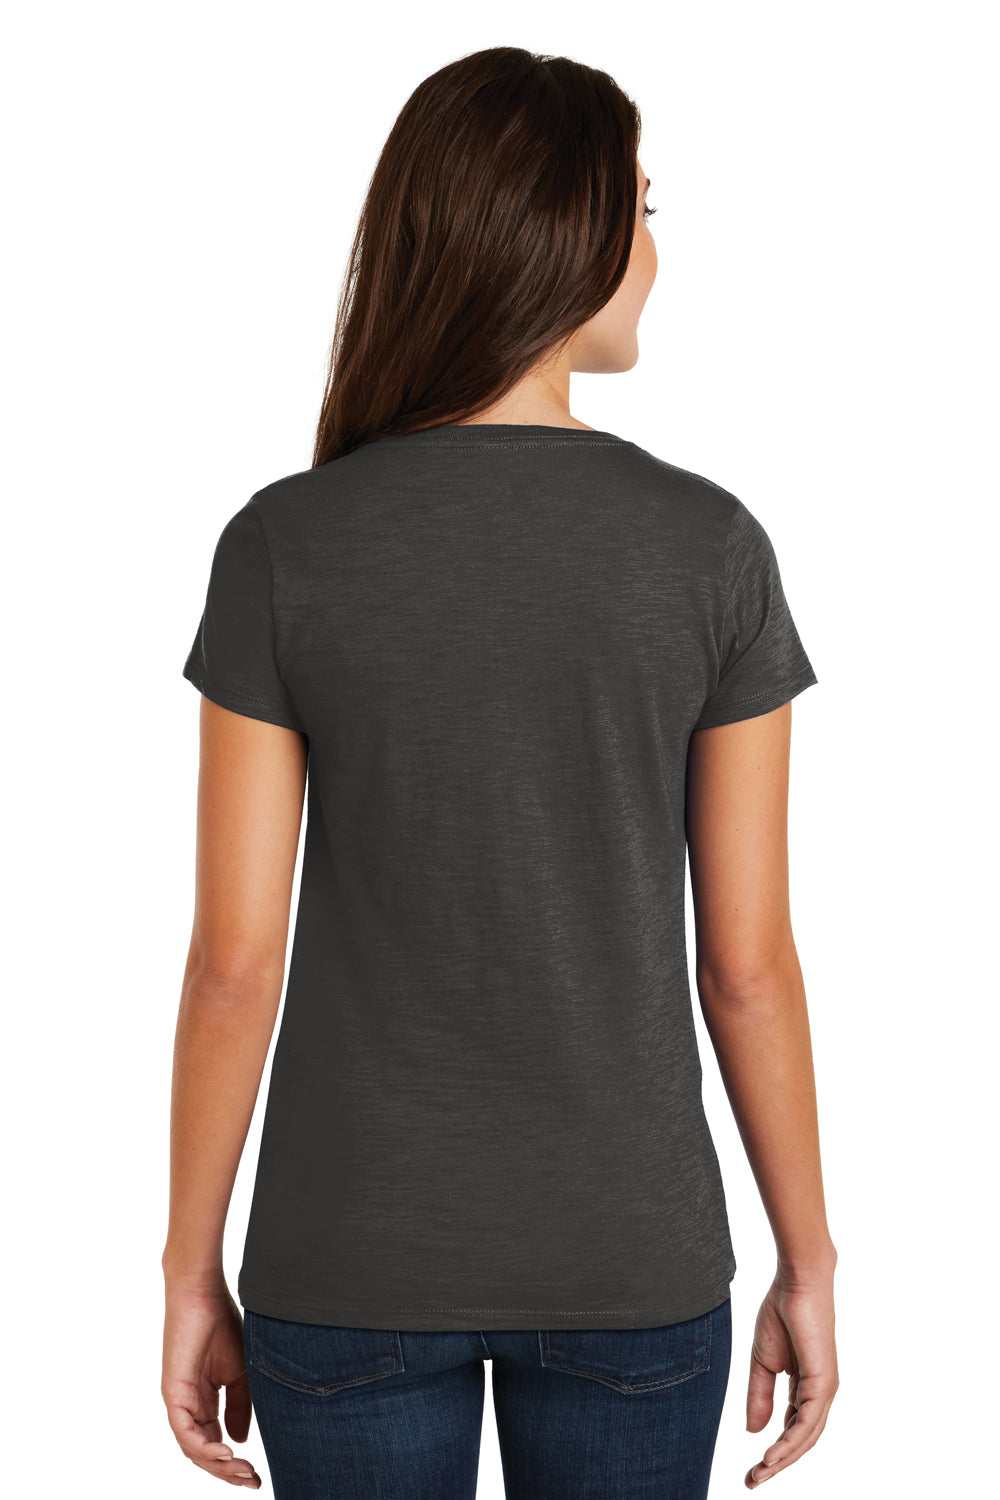 District DM3501 Womens Super Slub Short Sleeve V-Neck T-Shirt Charcoal Grey Back